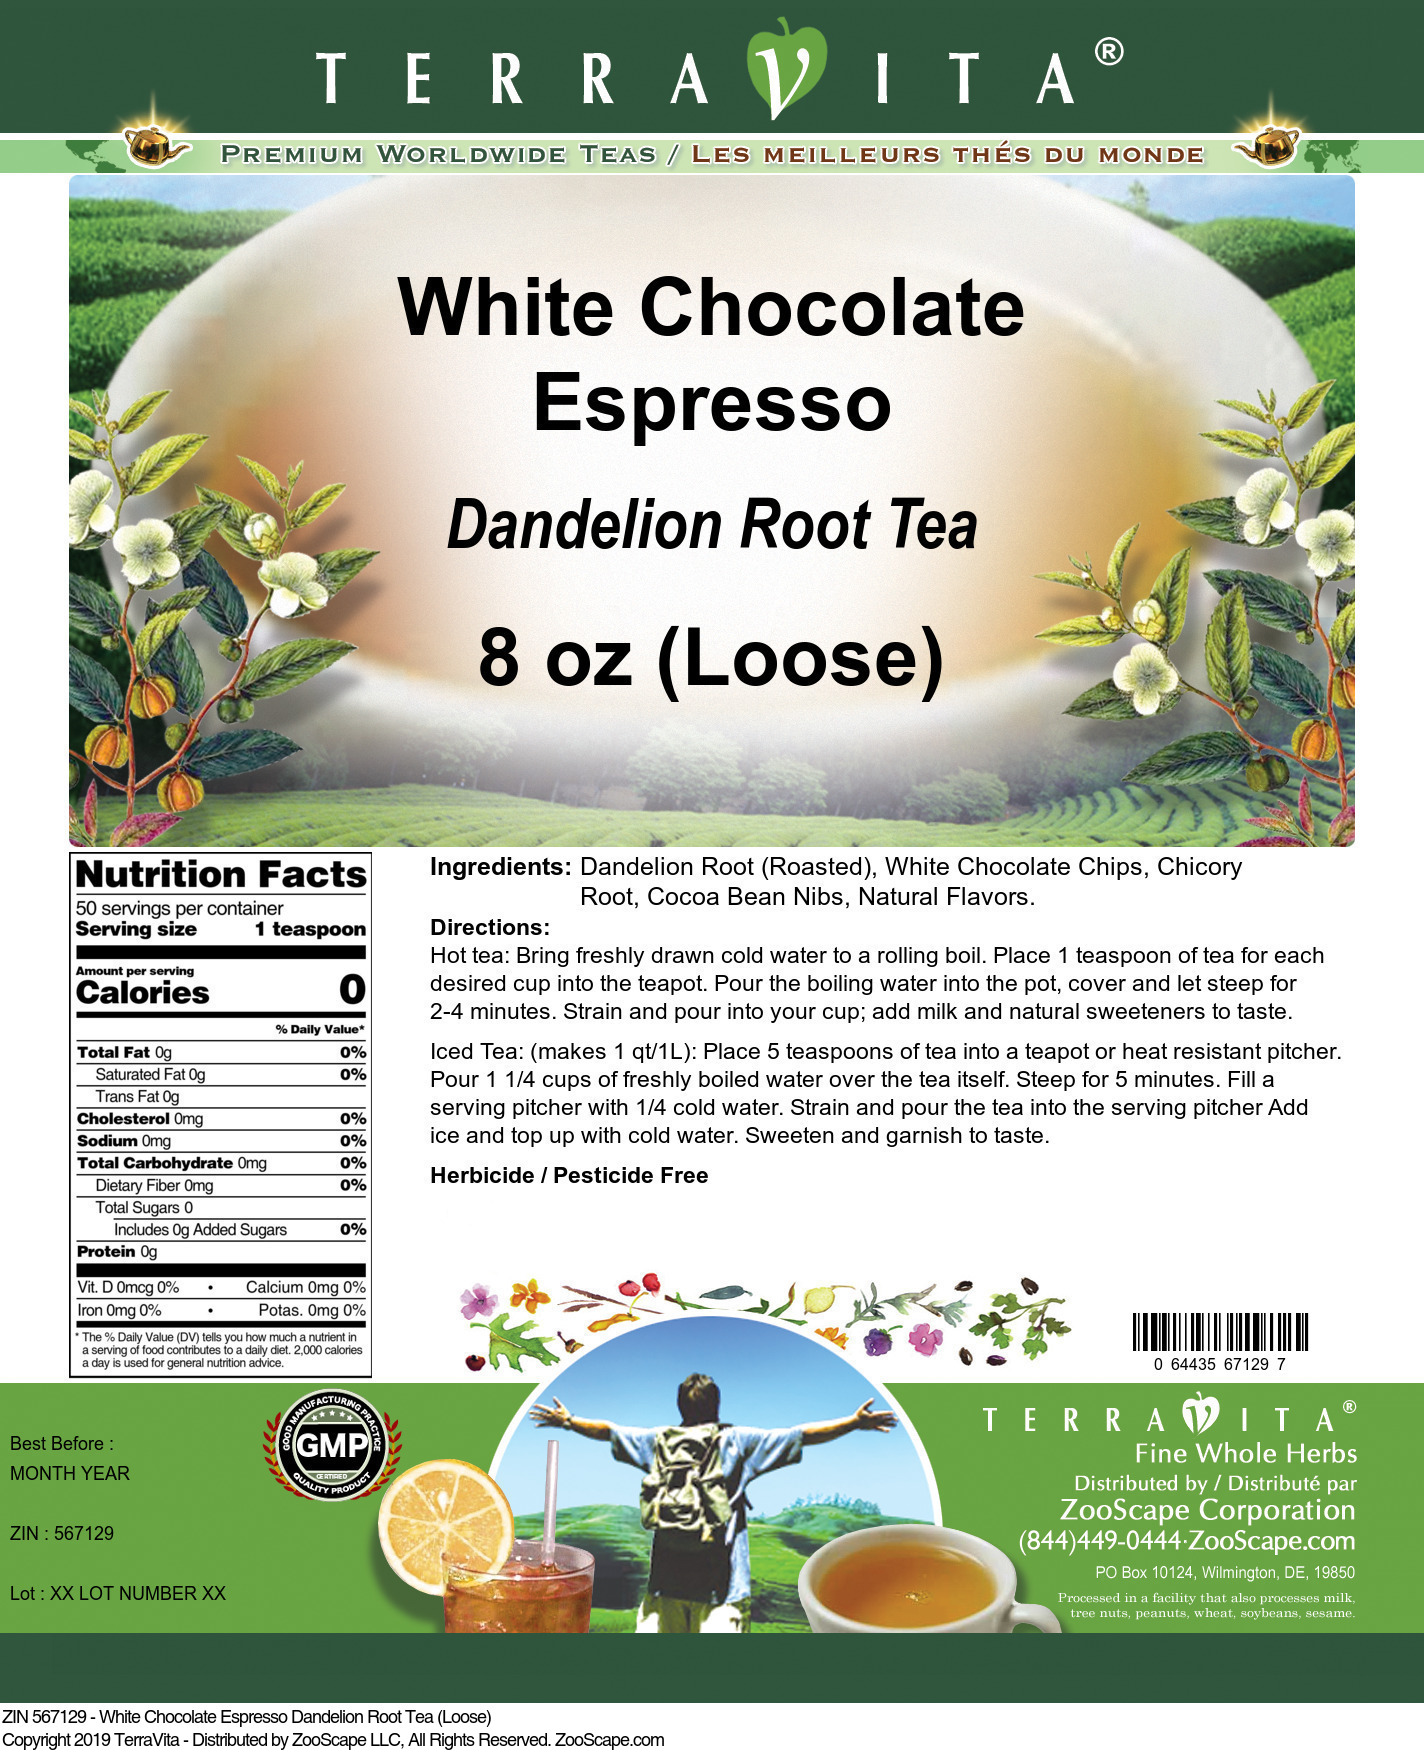 White Chocolate Espresso Dandelion Root Tea (Loose) - Label